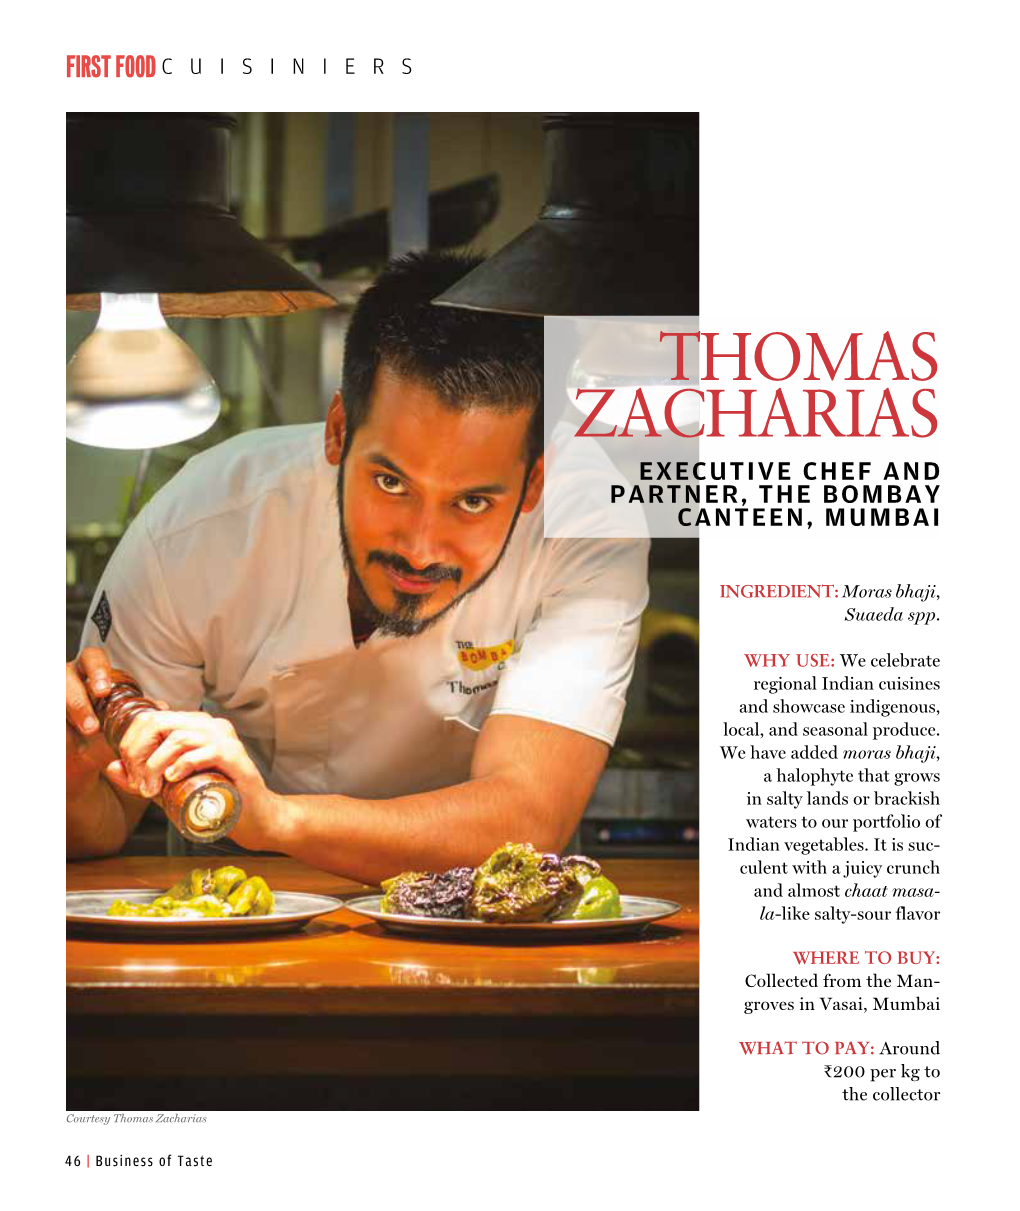 Thomas Zacharias Executive Chef and Partner, the Bombay Canteen, Mumbai